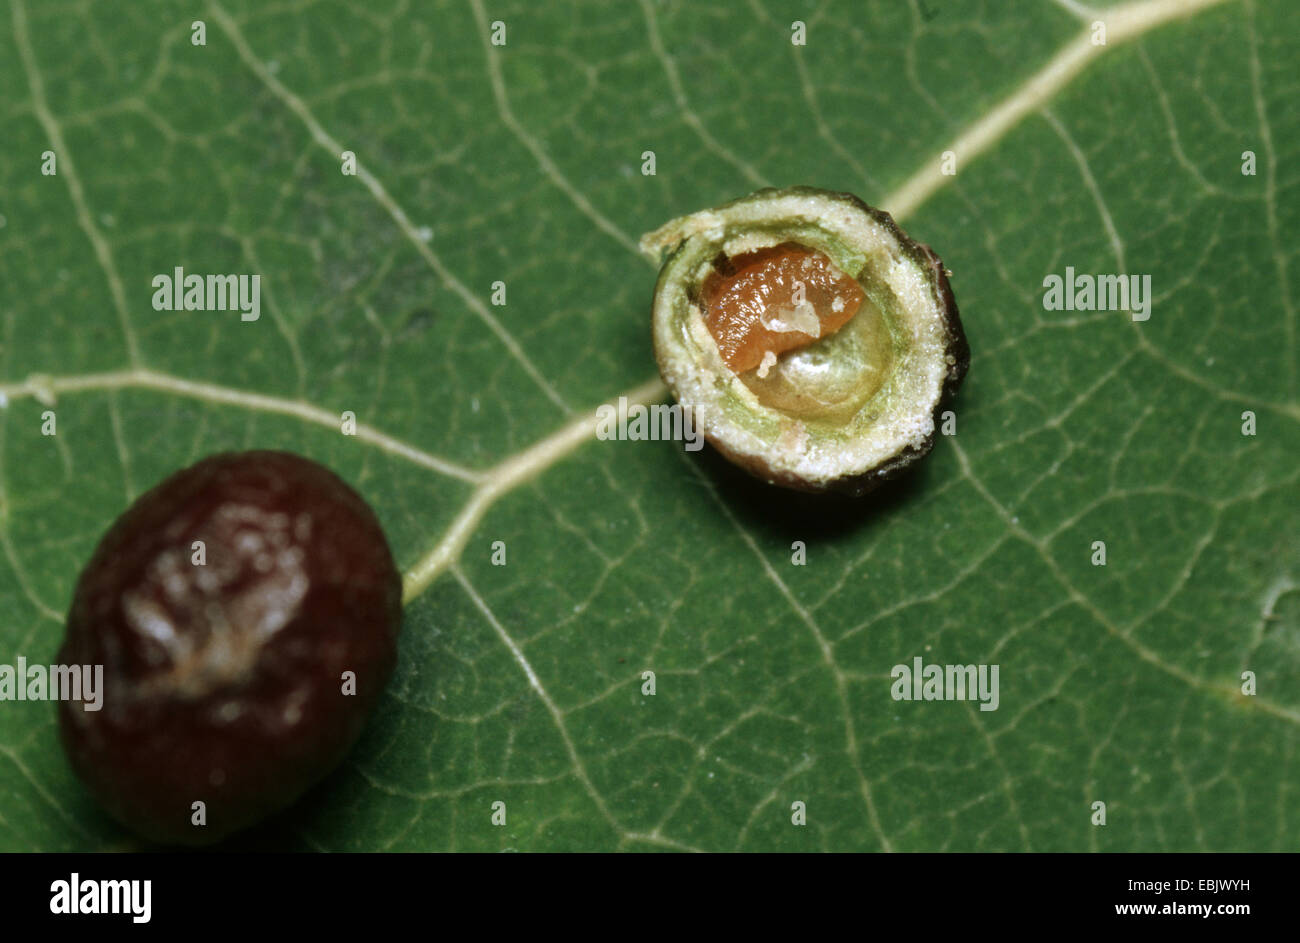 aspen leaf gall midge (Harmandia tremulae, Harmandiola tremulae), opened gall with larva at European aspen (Populus tremula), Germany Stock Photo